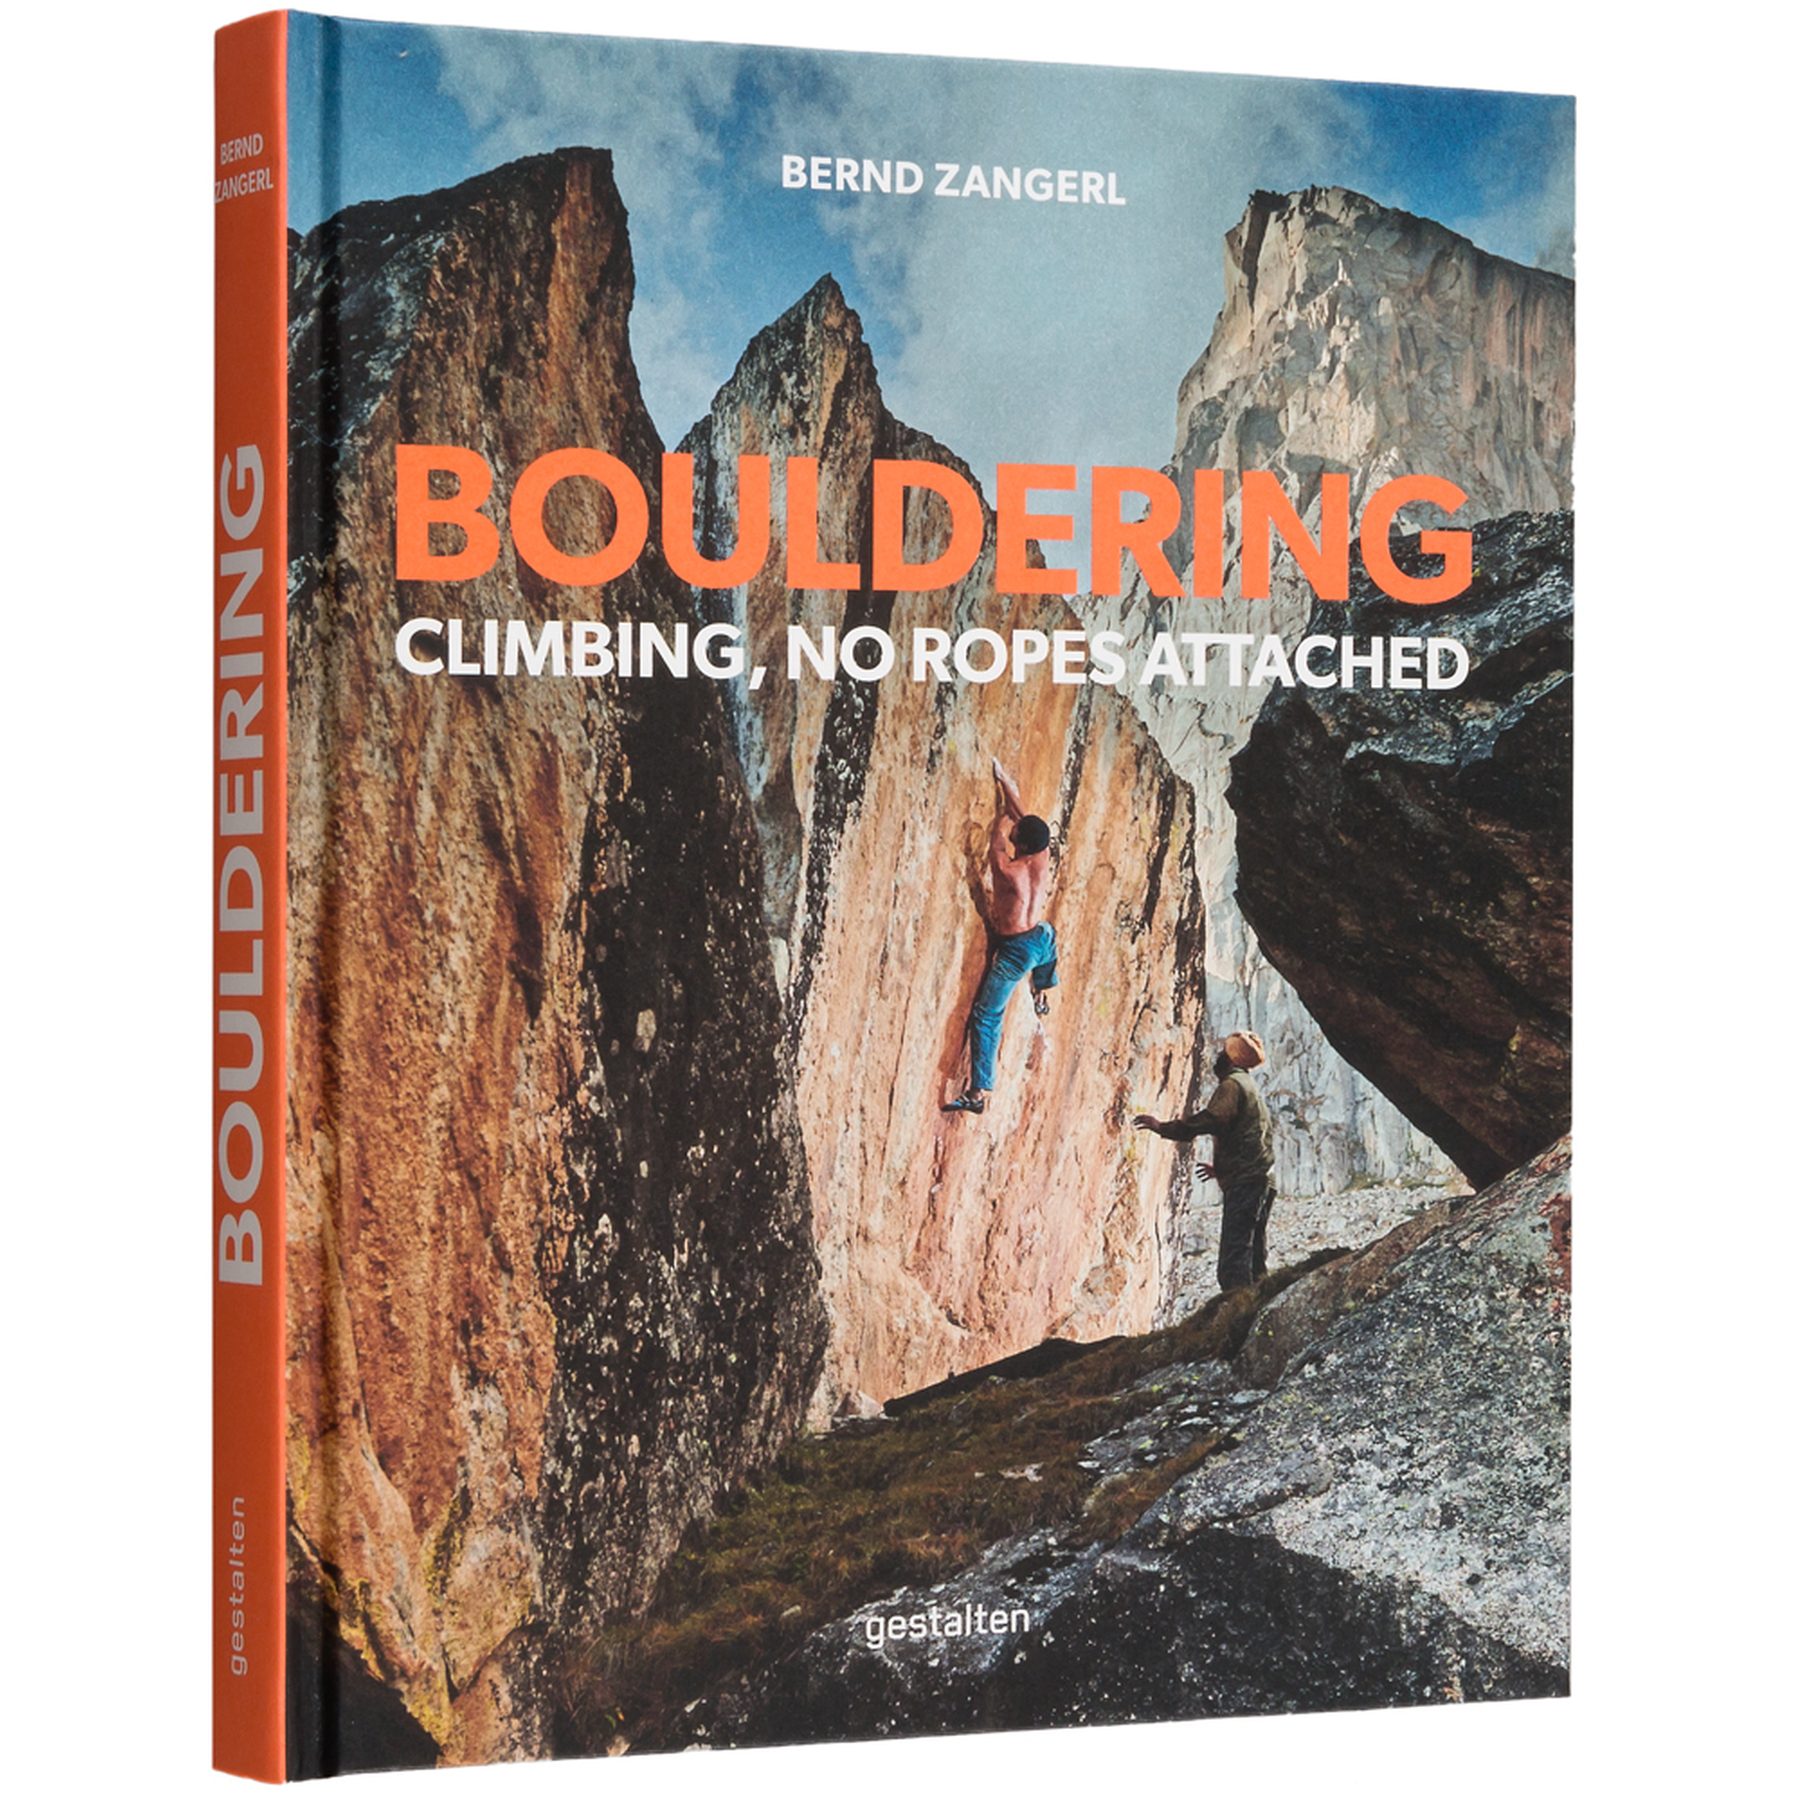 Foto de gestalten Bouldering - inglés - Climbing, No Ropes Attached